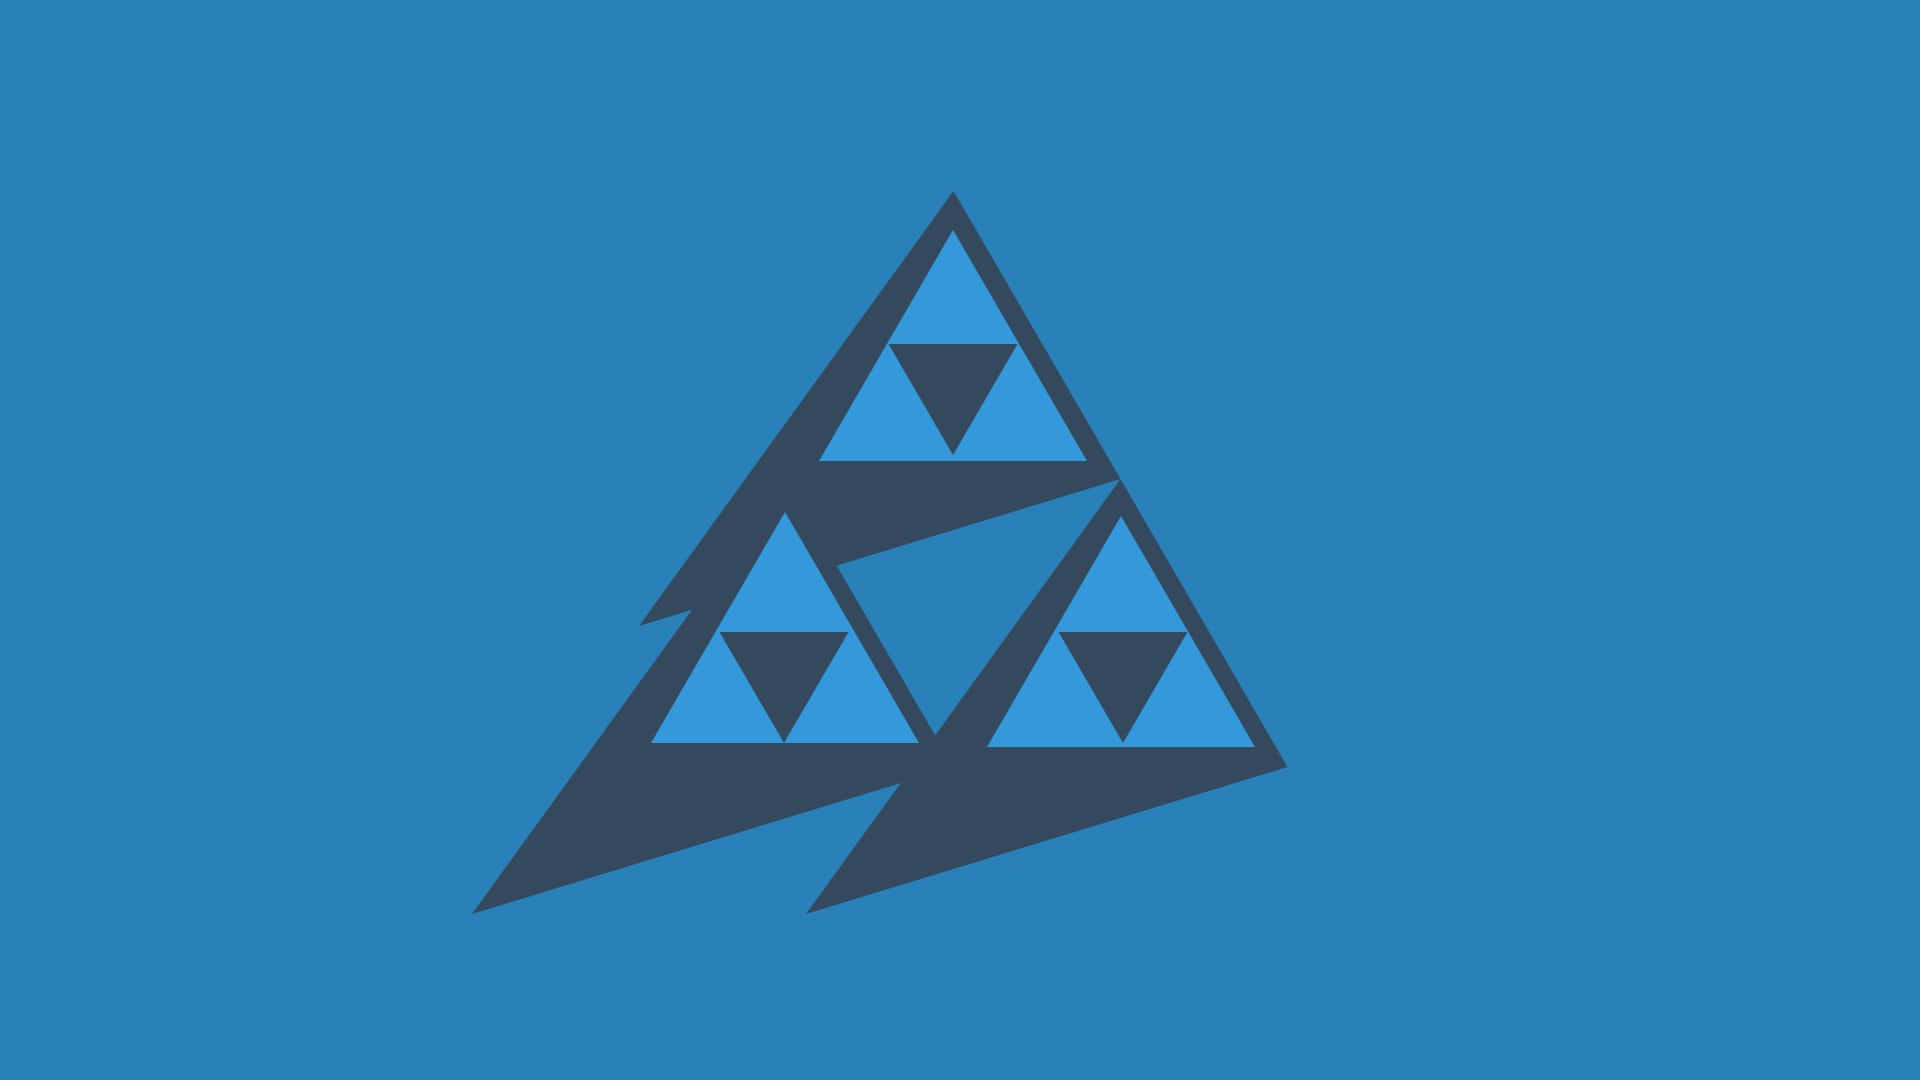 Image The Legendary Triforce Symbol Background